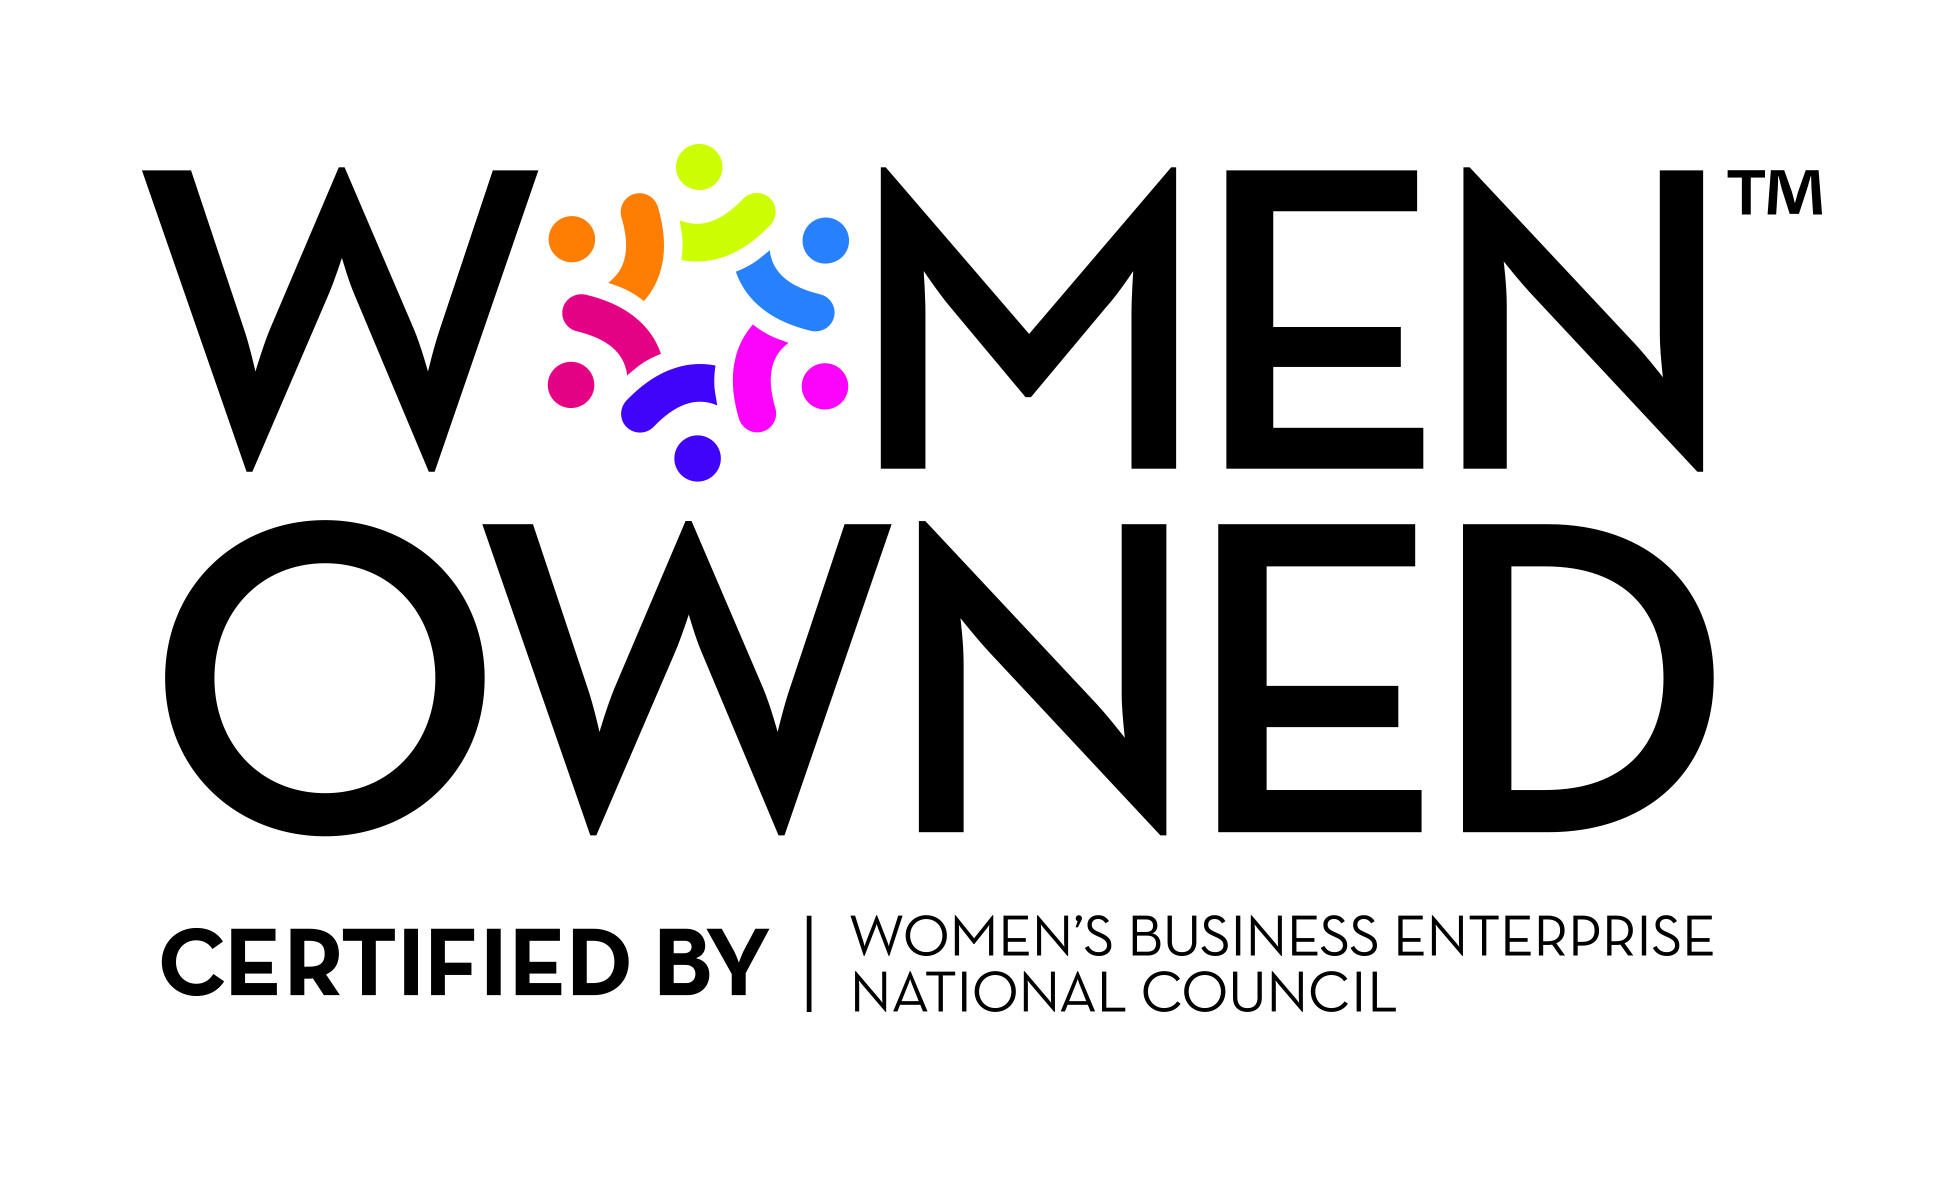 Women Owned Business certification logo